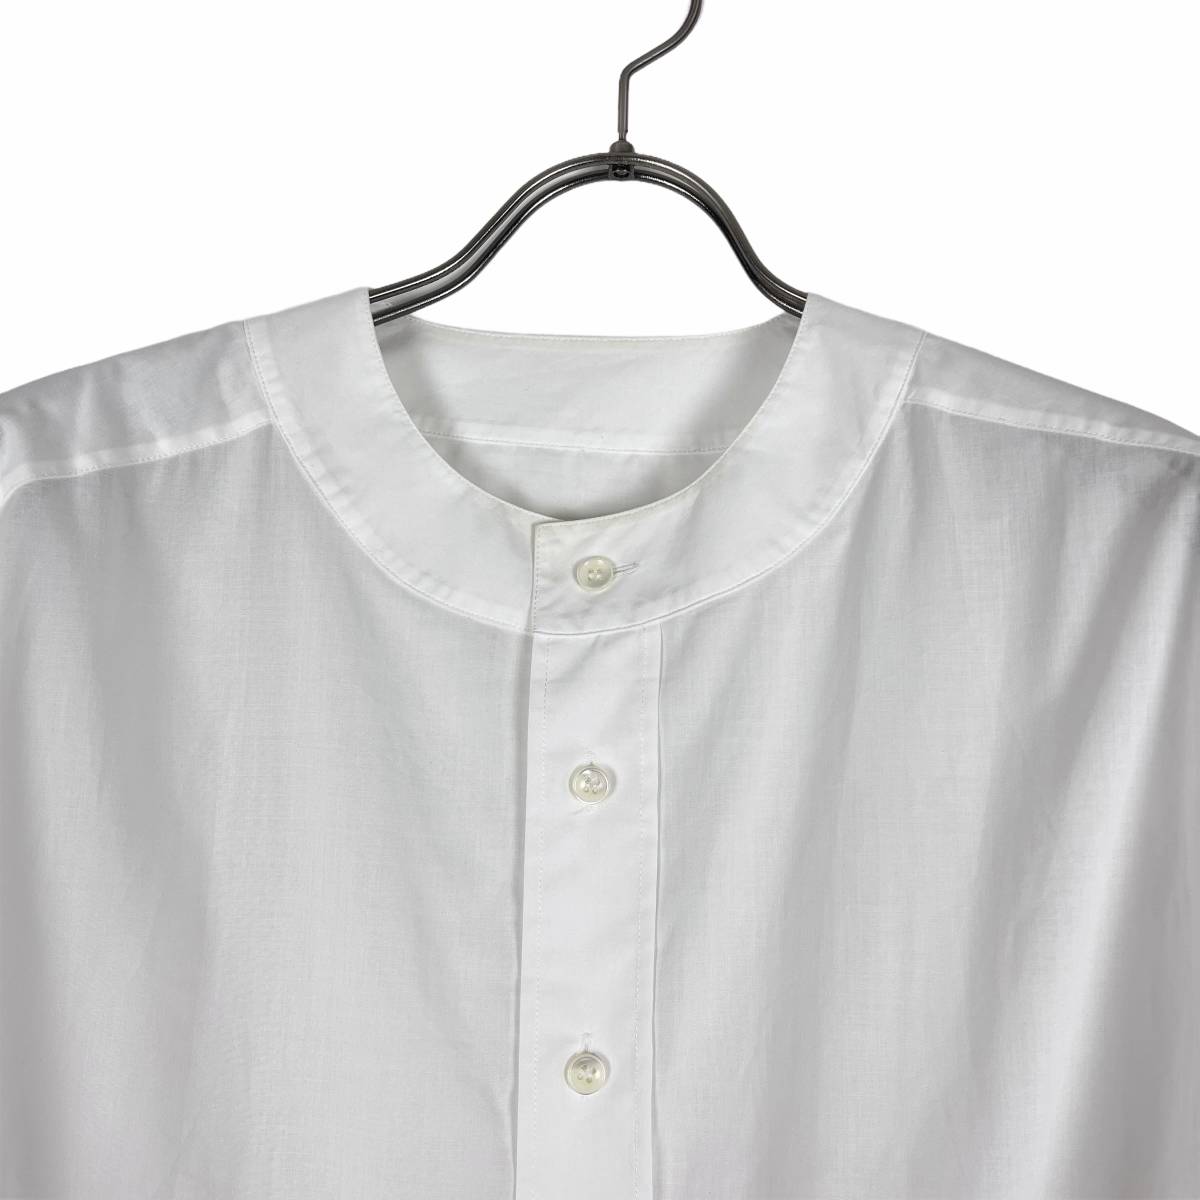 Maison Margiela(メゾン マルジェラ) collarless shirts 16AW (white）_画像2